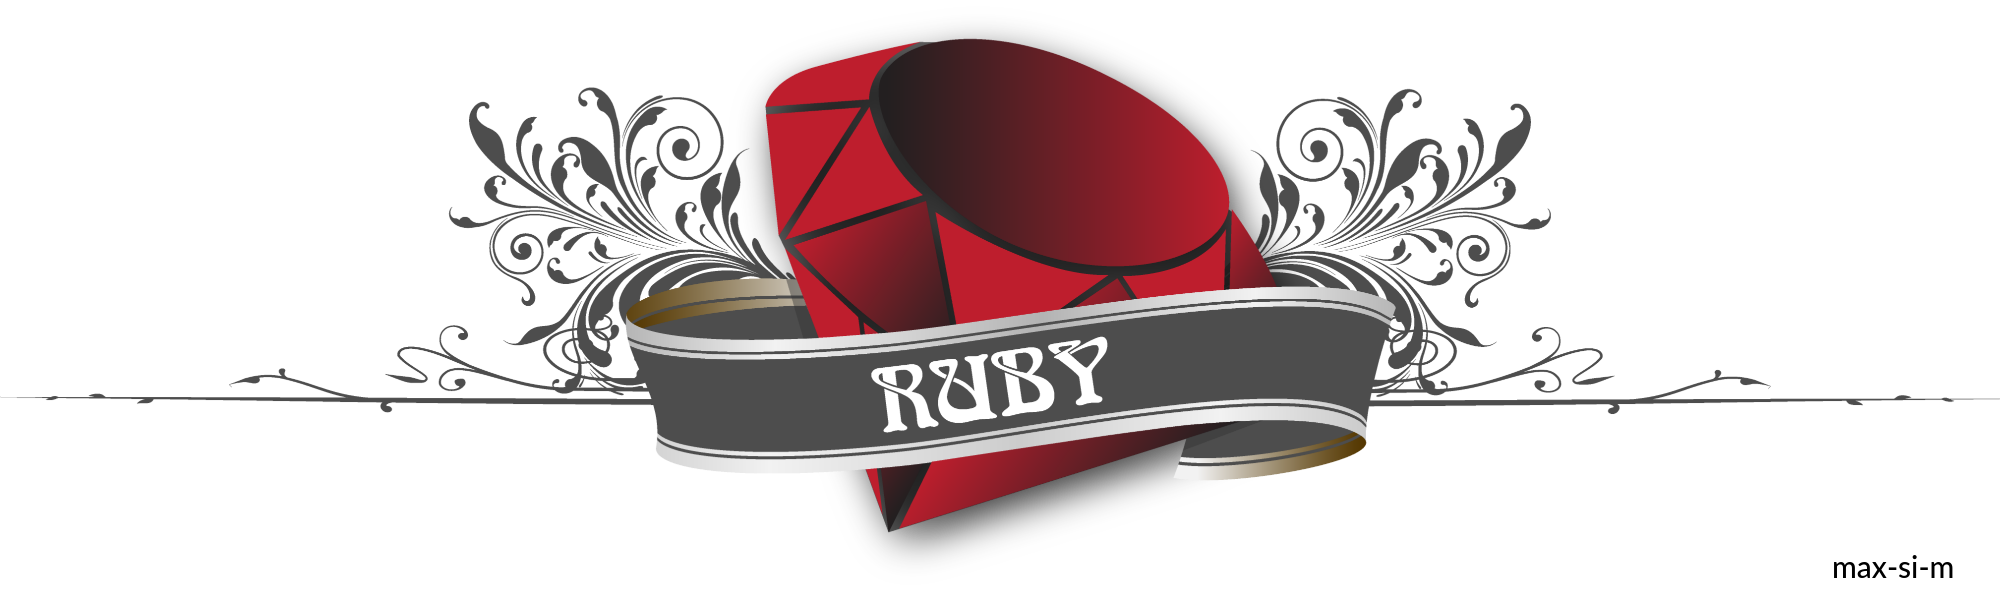 Install Ruby environment in Ubuntu